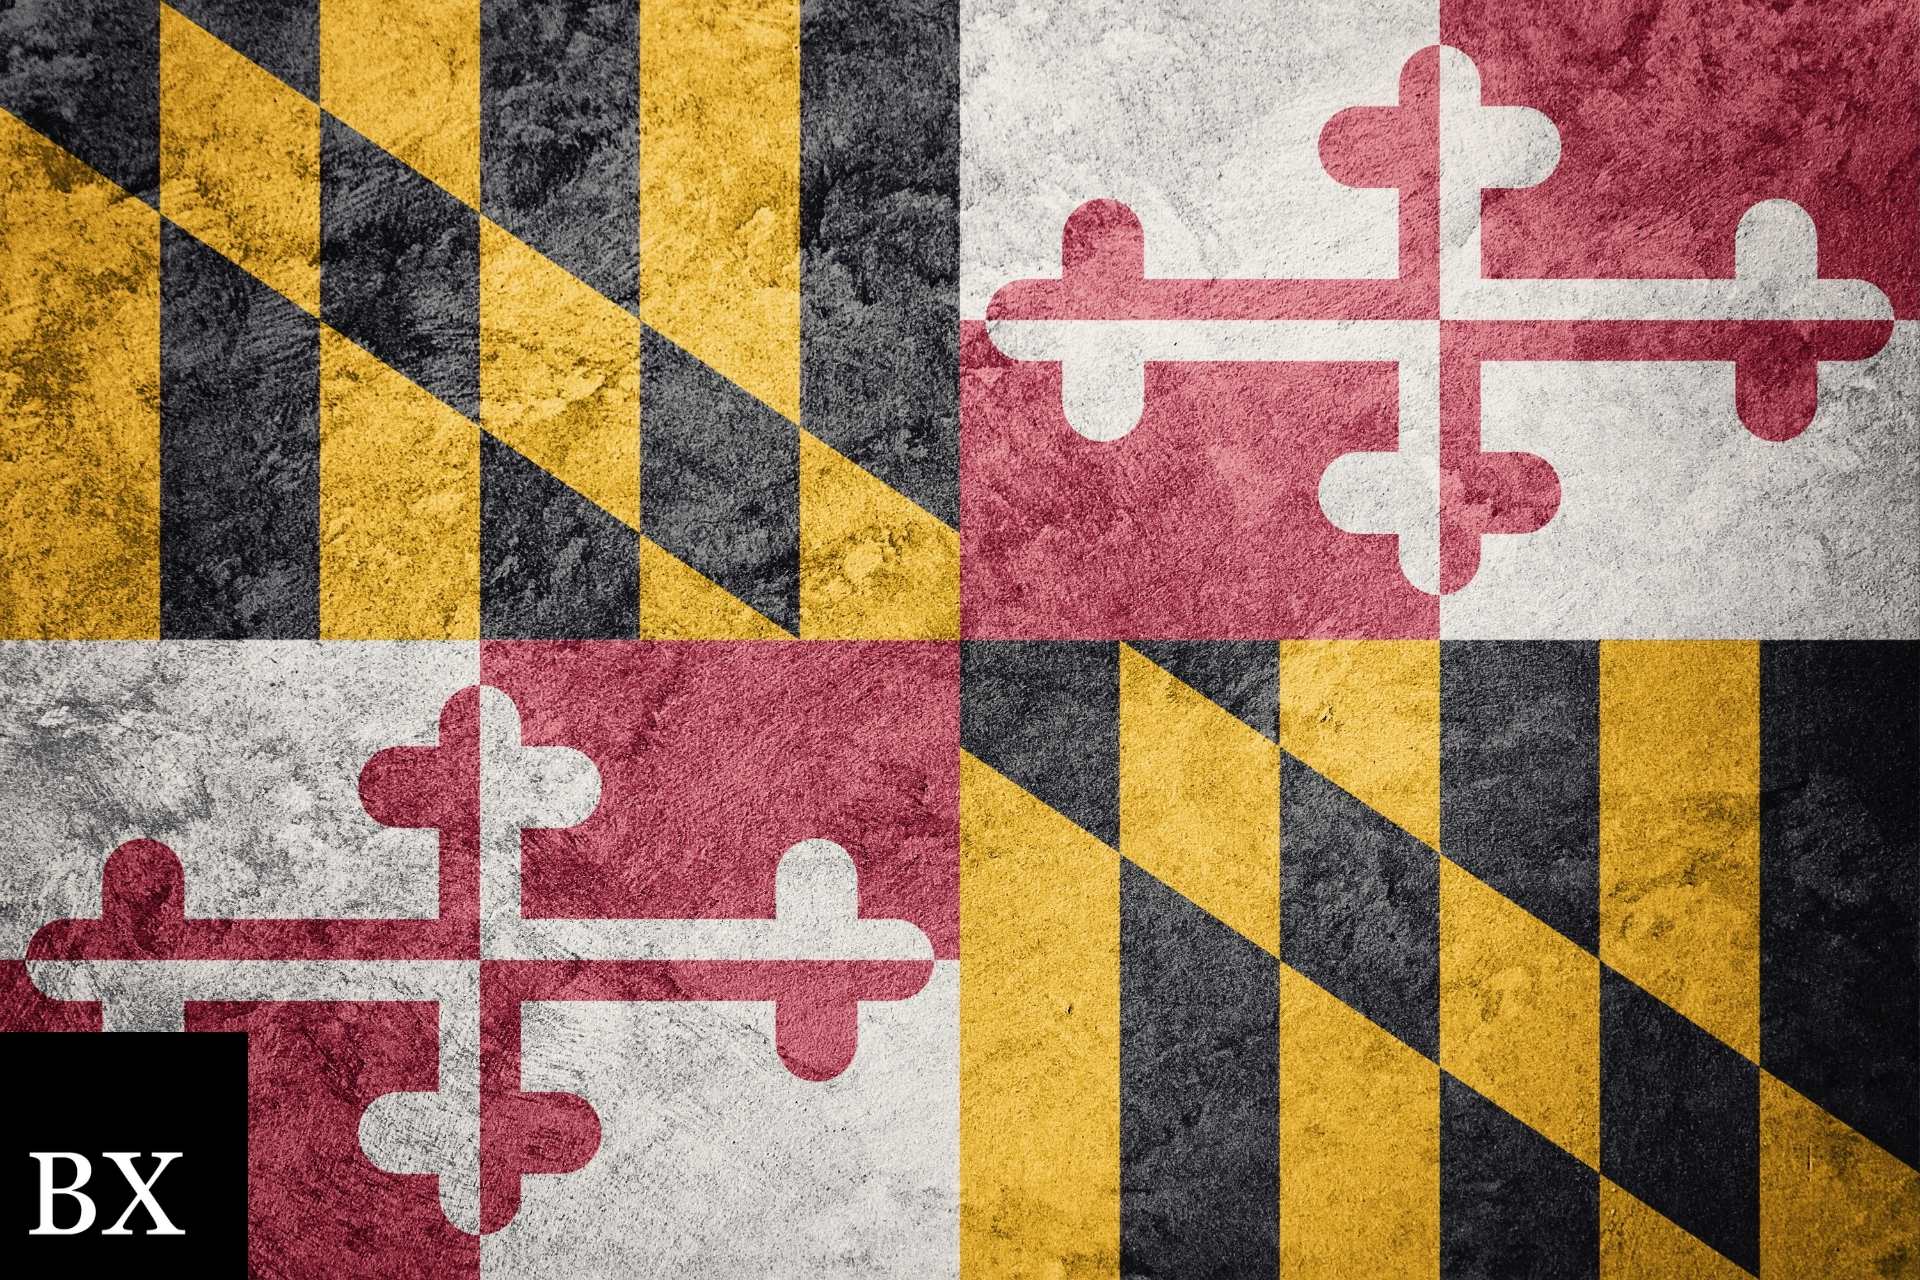 Maryland Home Builder Bond